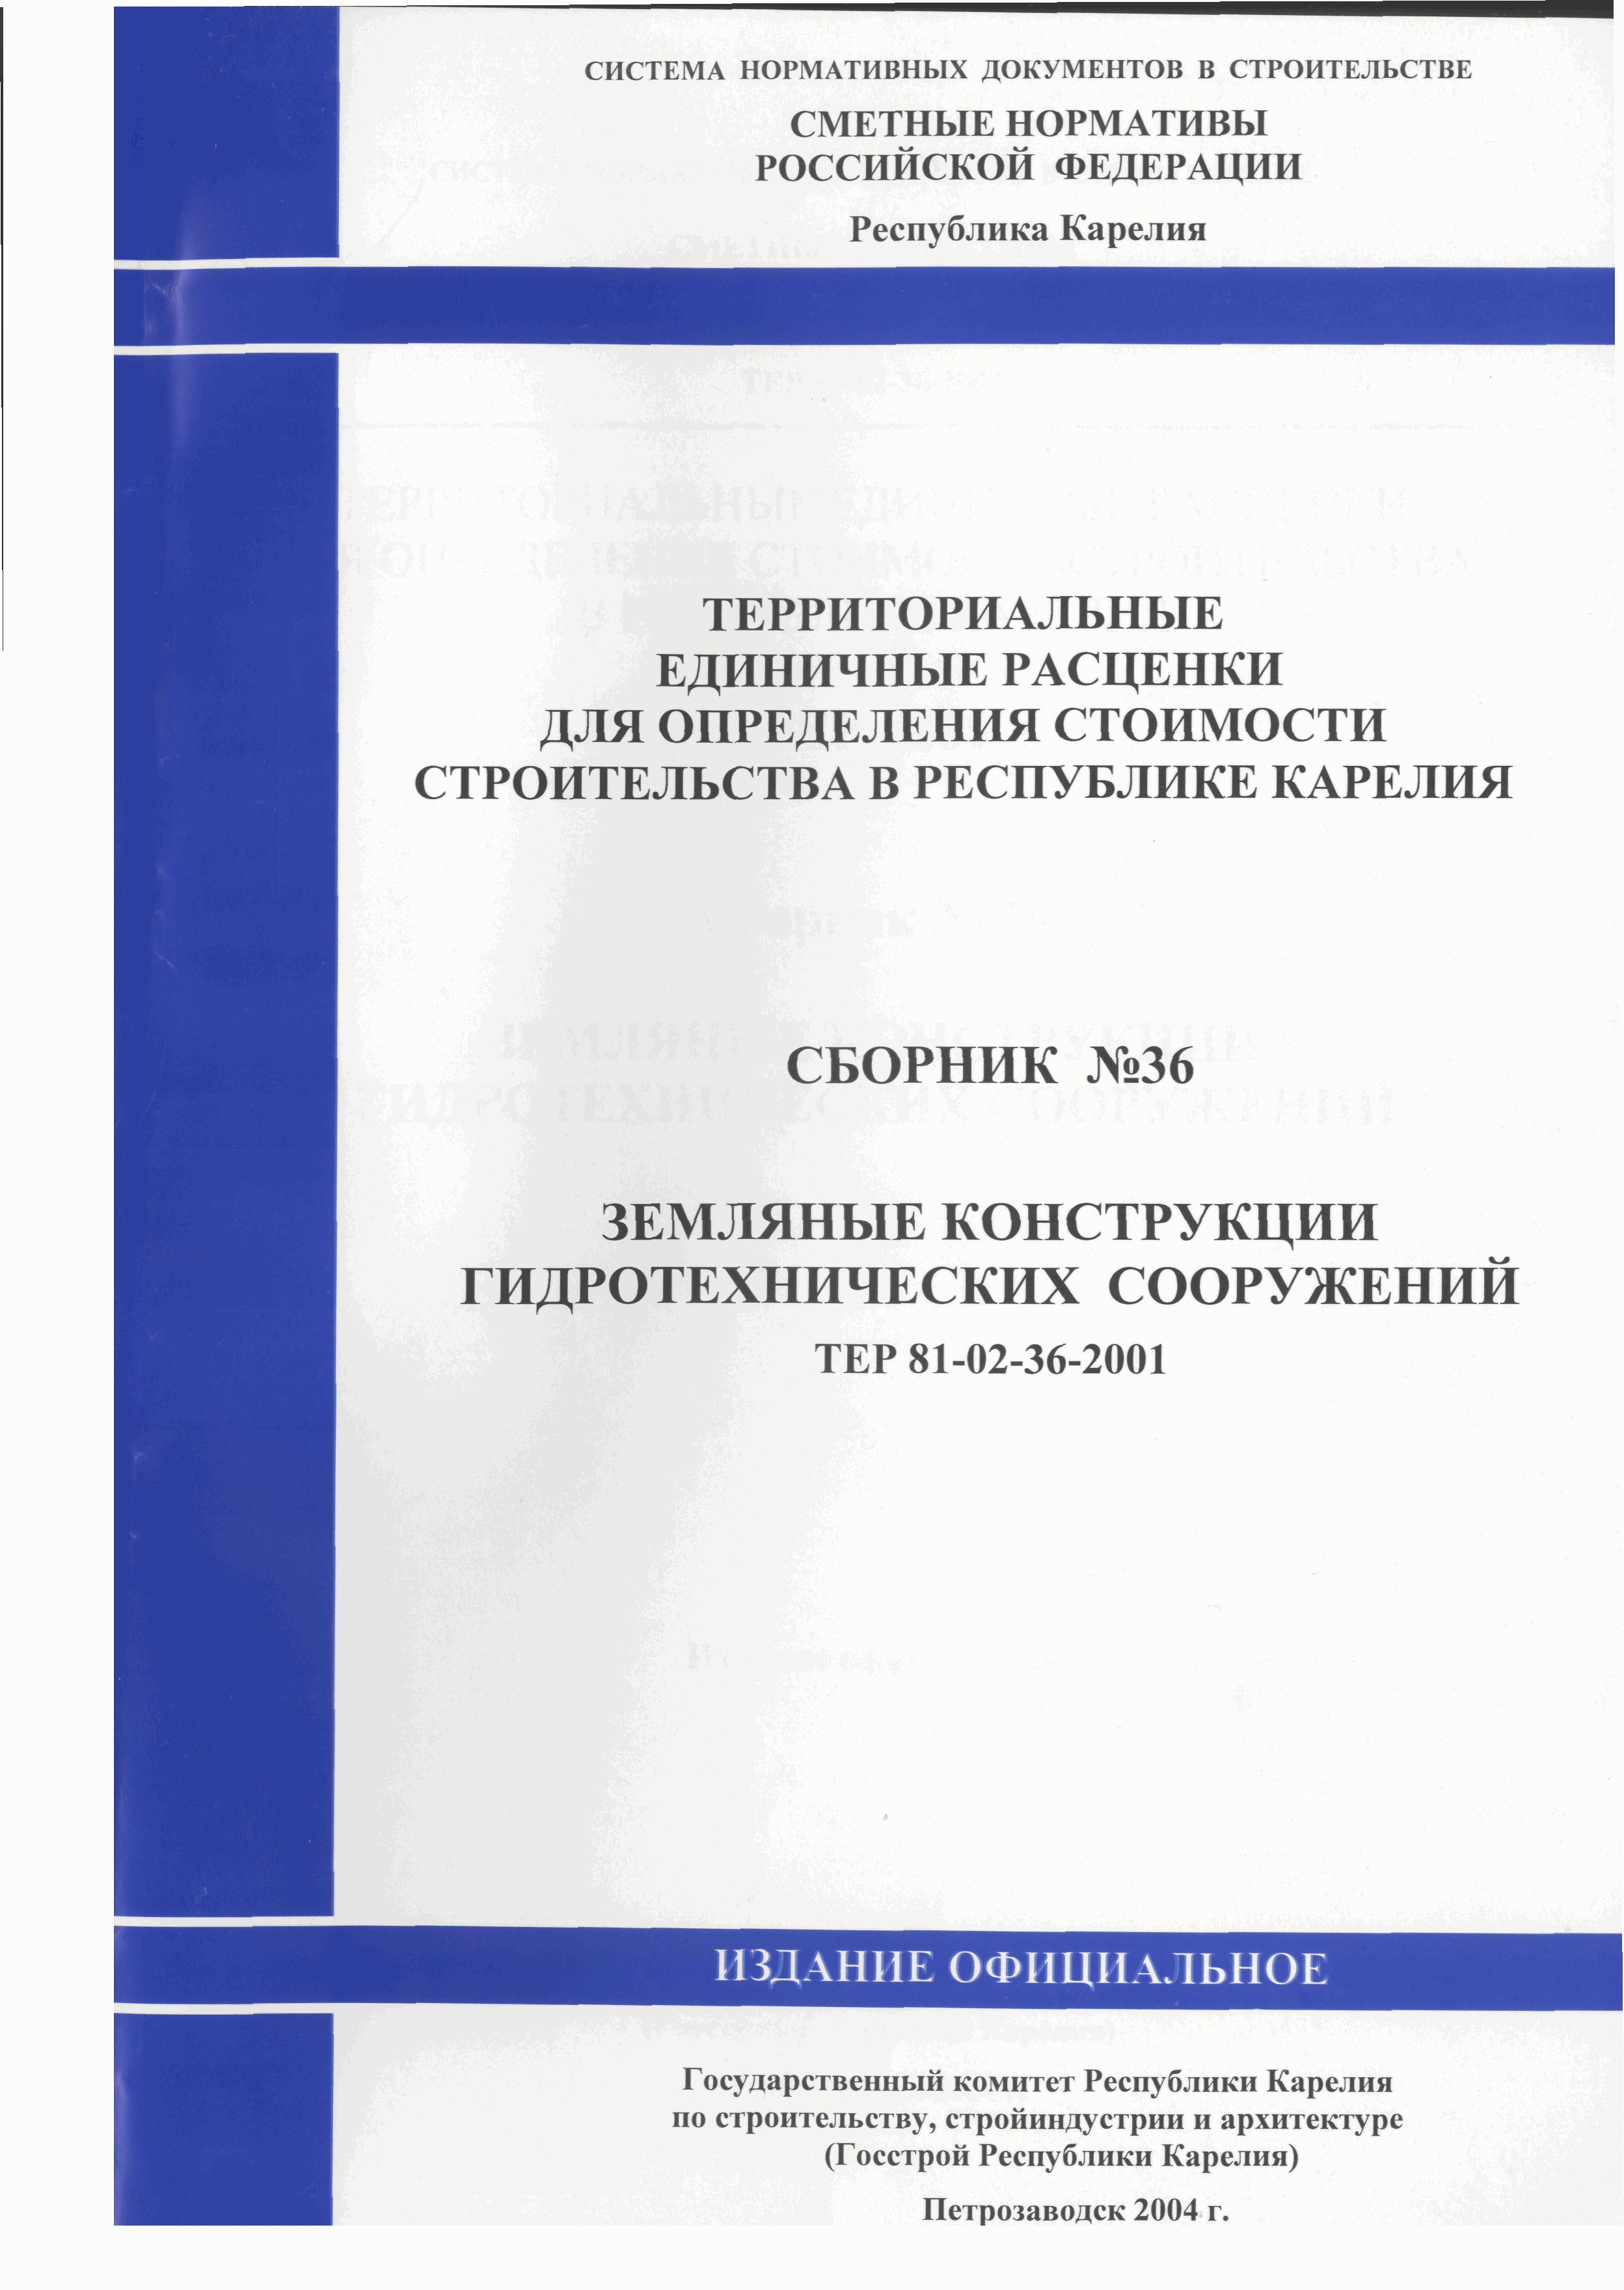 ТЕР Республика Карелия 2001-36